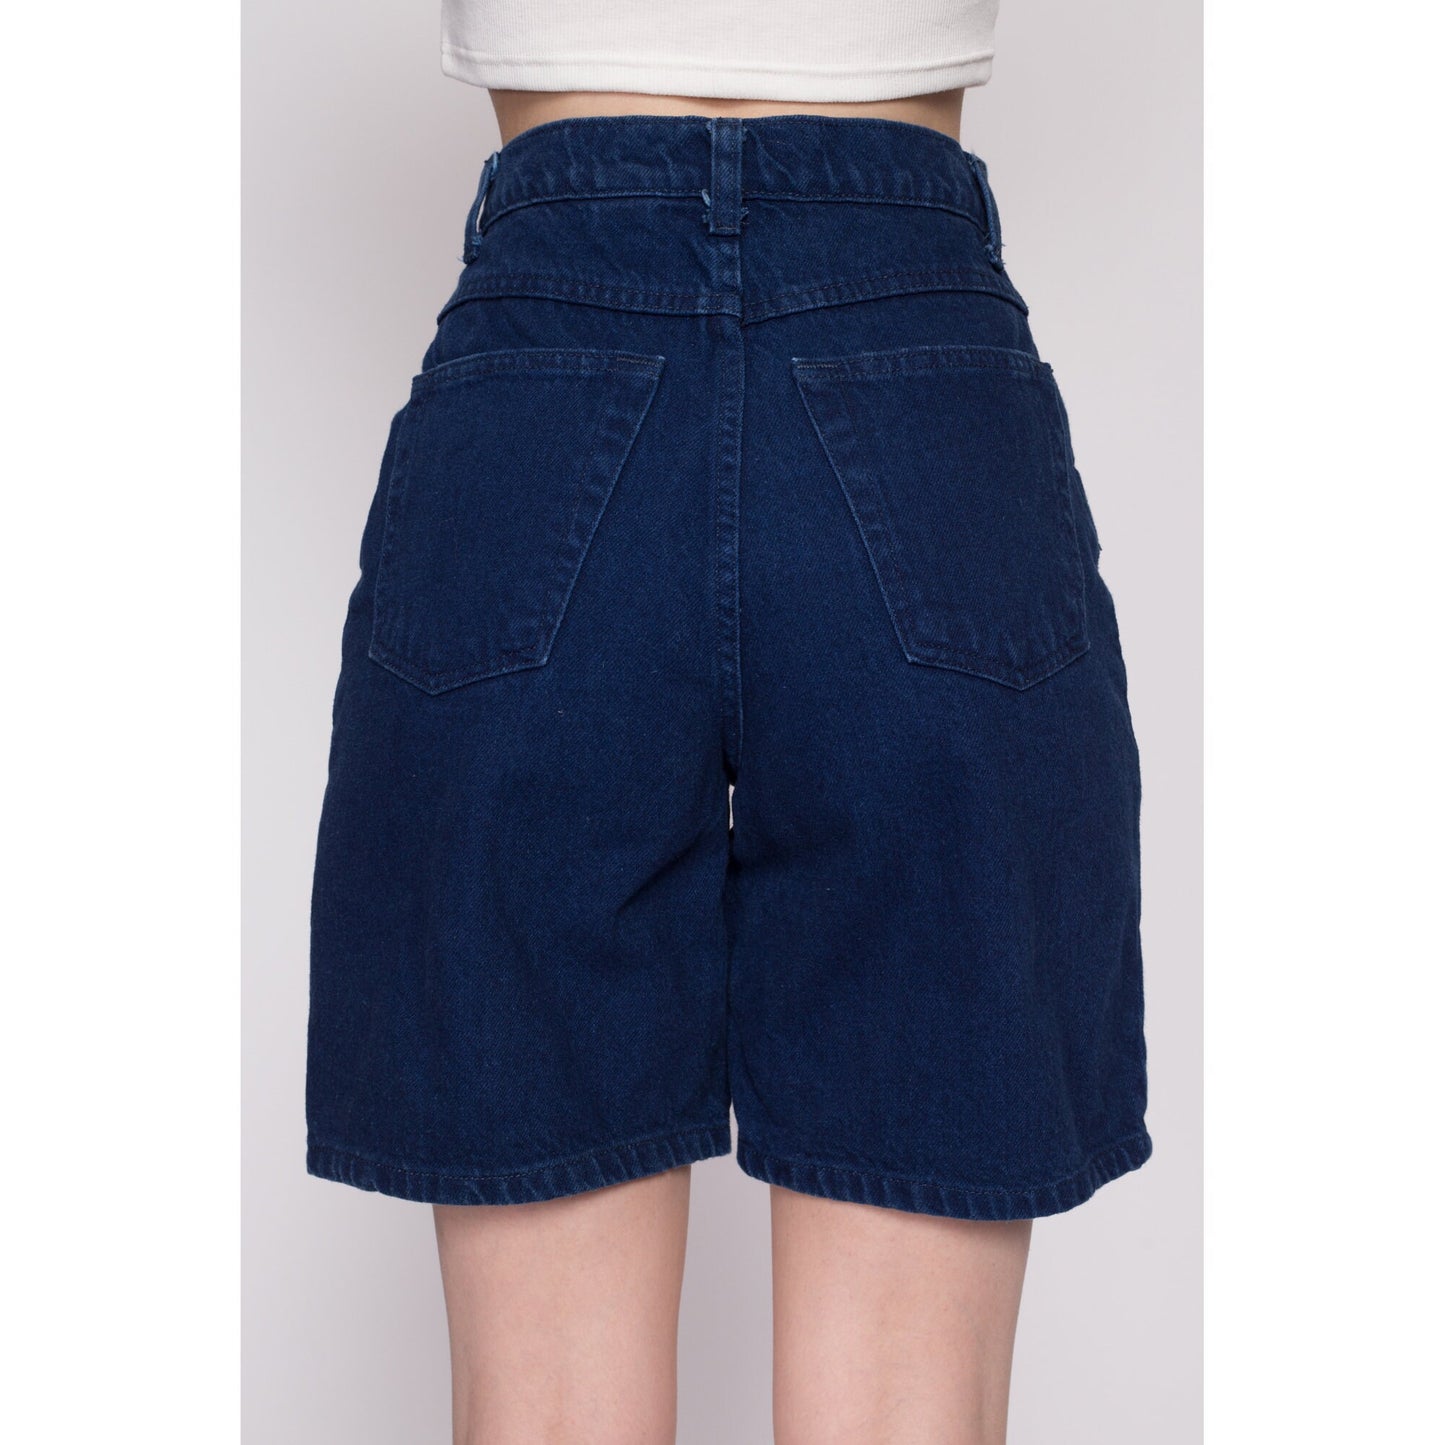 XS-Sm 90s Dark Wash Denim Mom Shorts 26" | Vintage High Waisted Long Inseam Jean Shorts